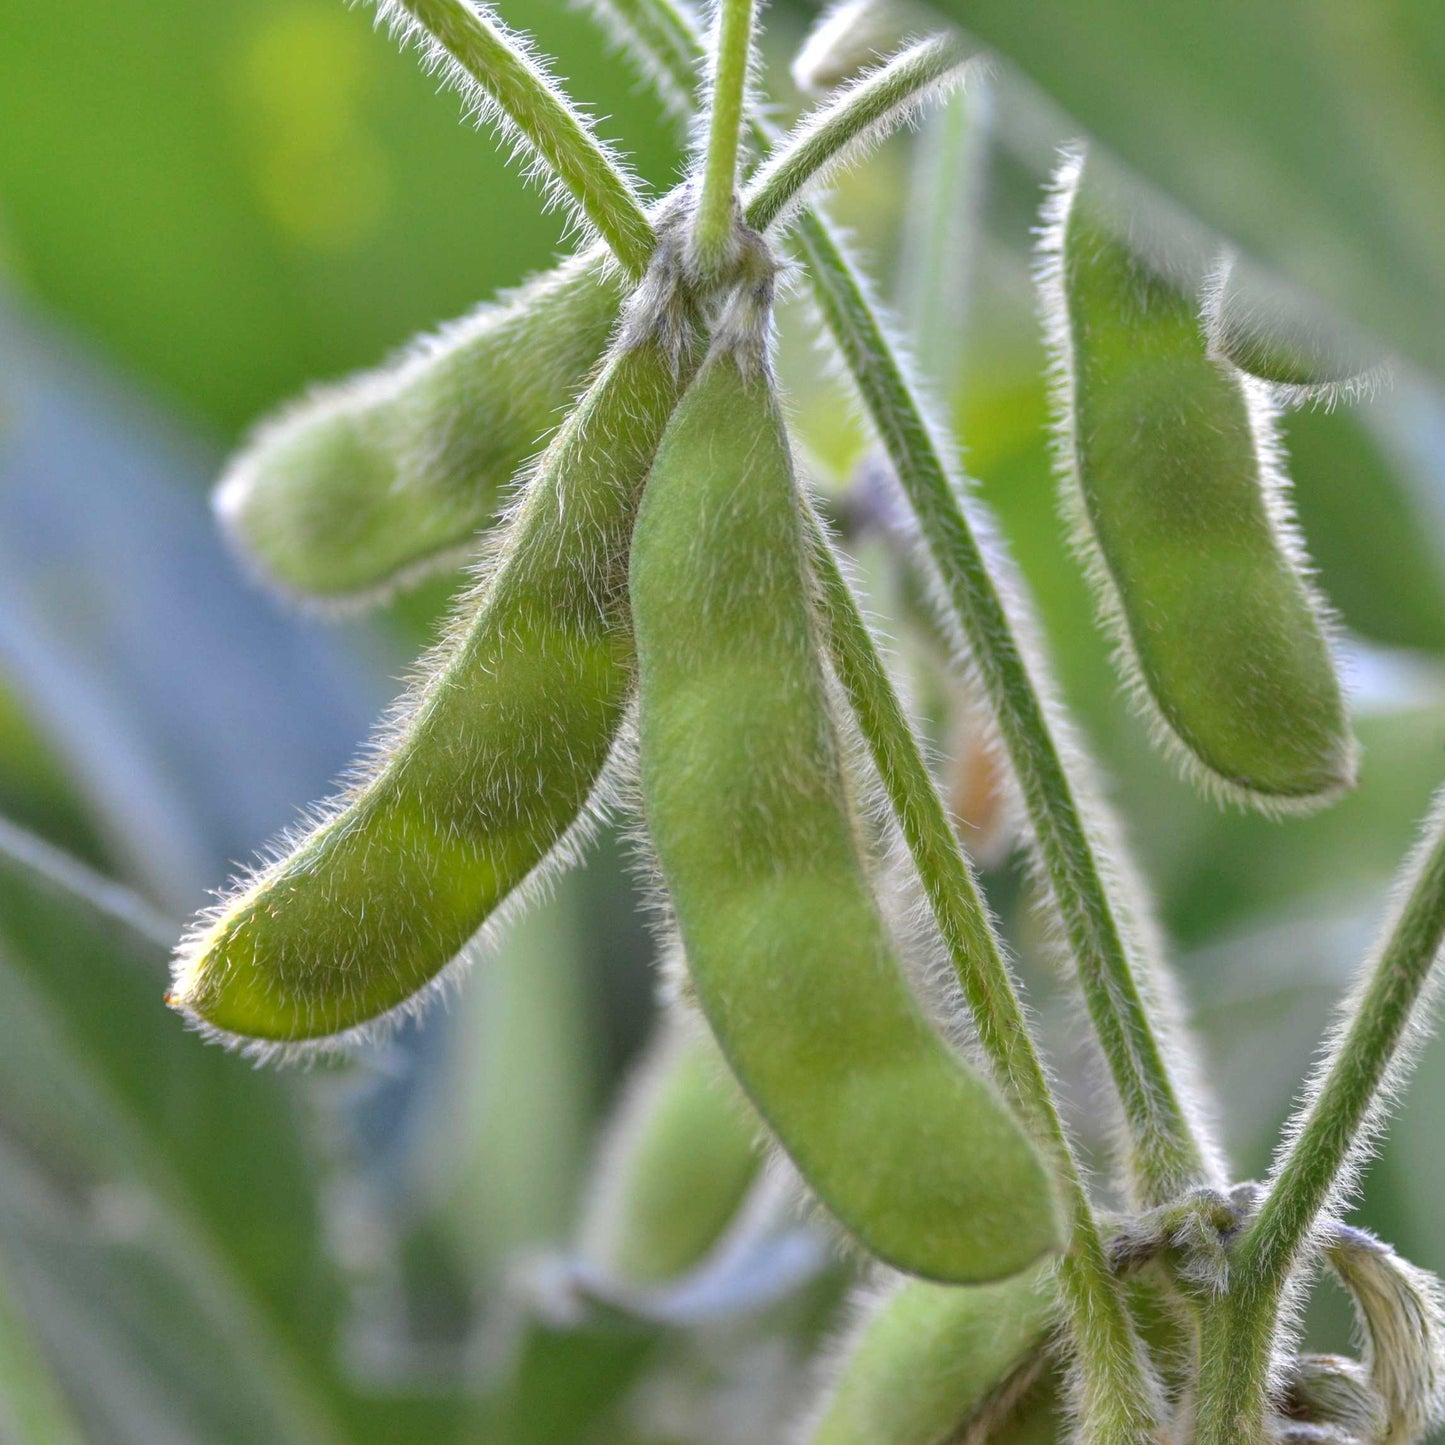 20Pcs Organic Non-GMO Soybean Seeds Pack